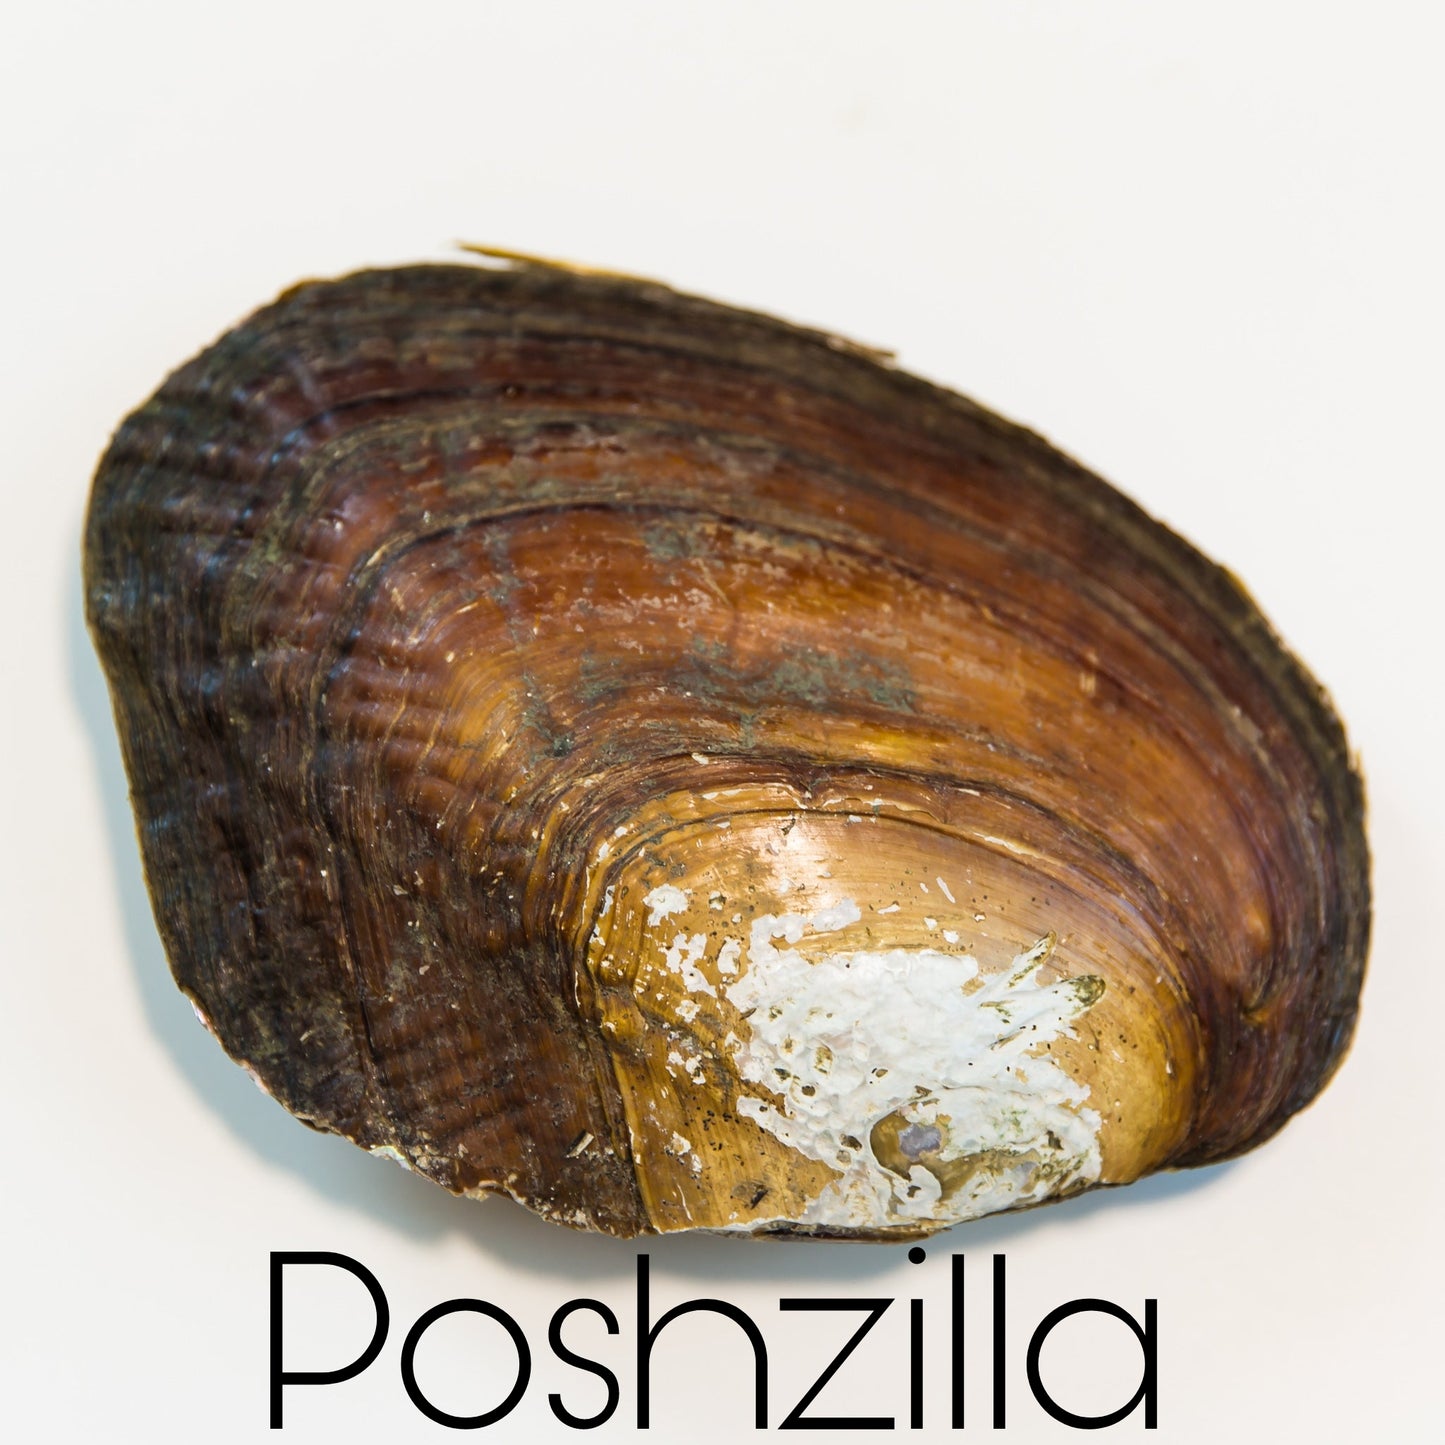 Live Show Poshzilla Oyster